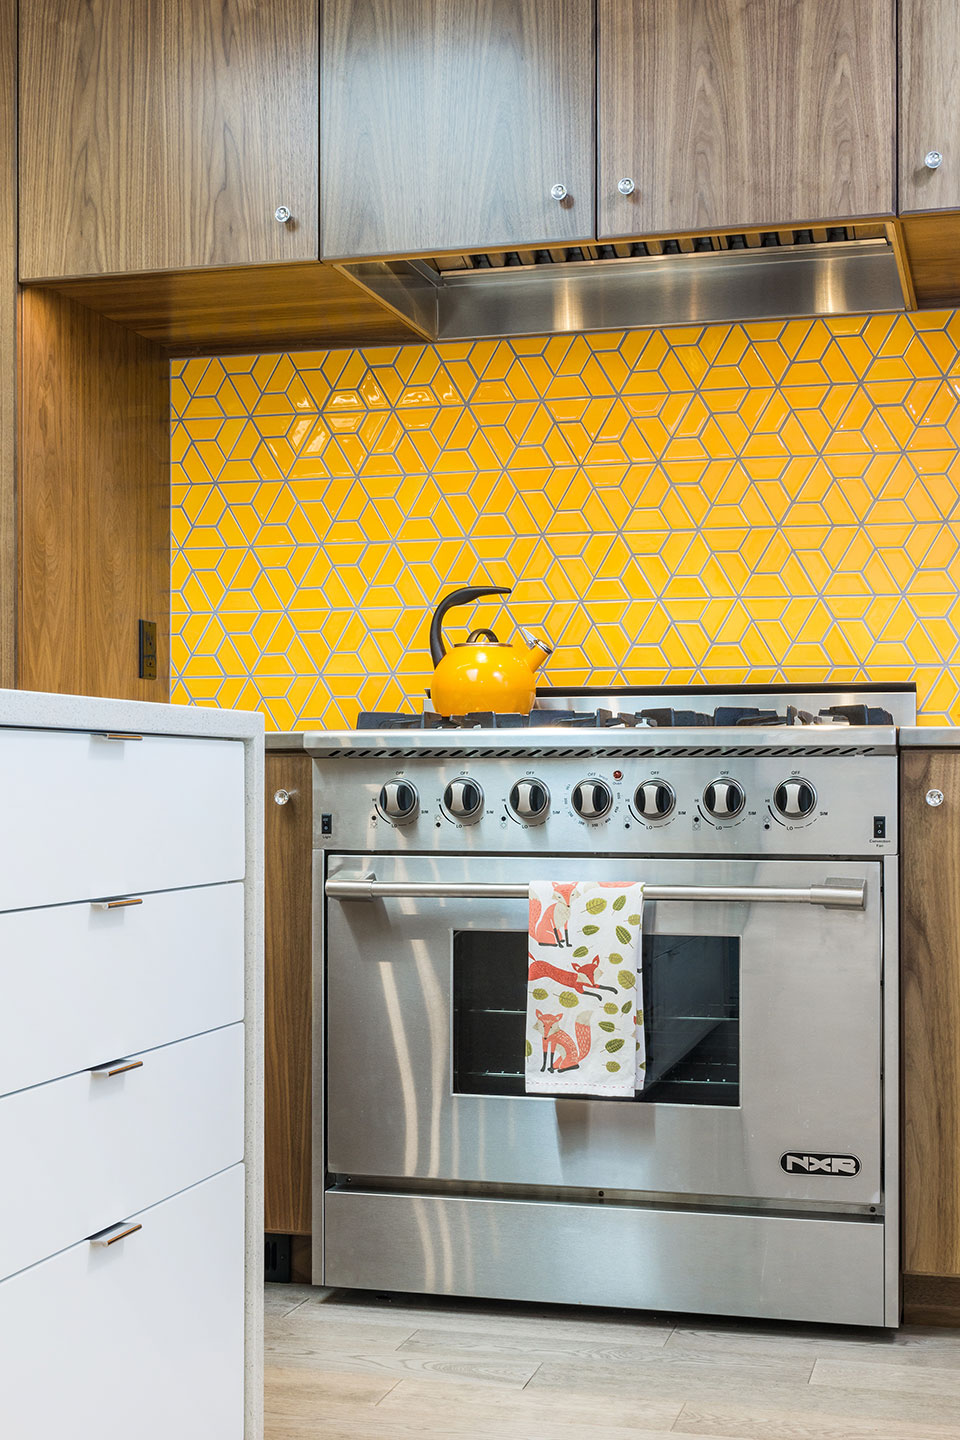 Kitchen renovation with bright orange backsplash tile.